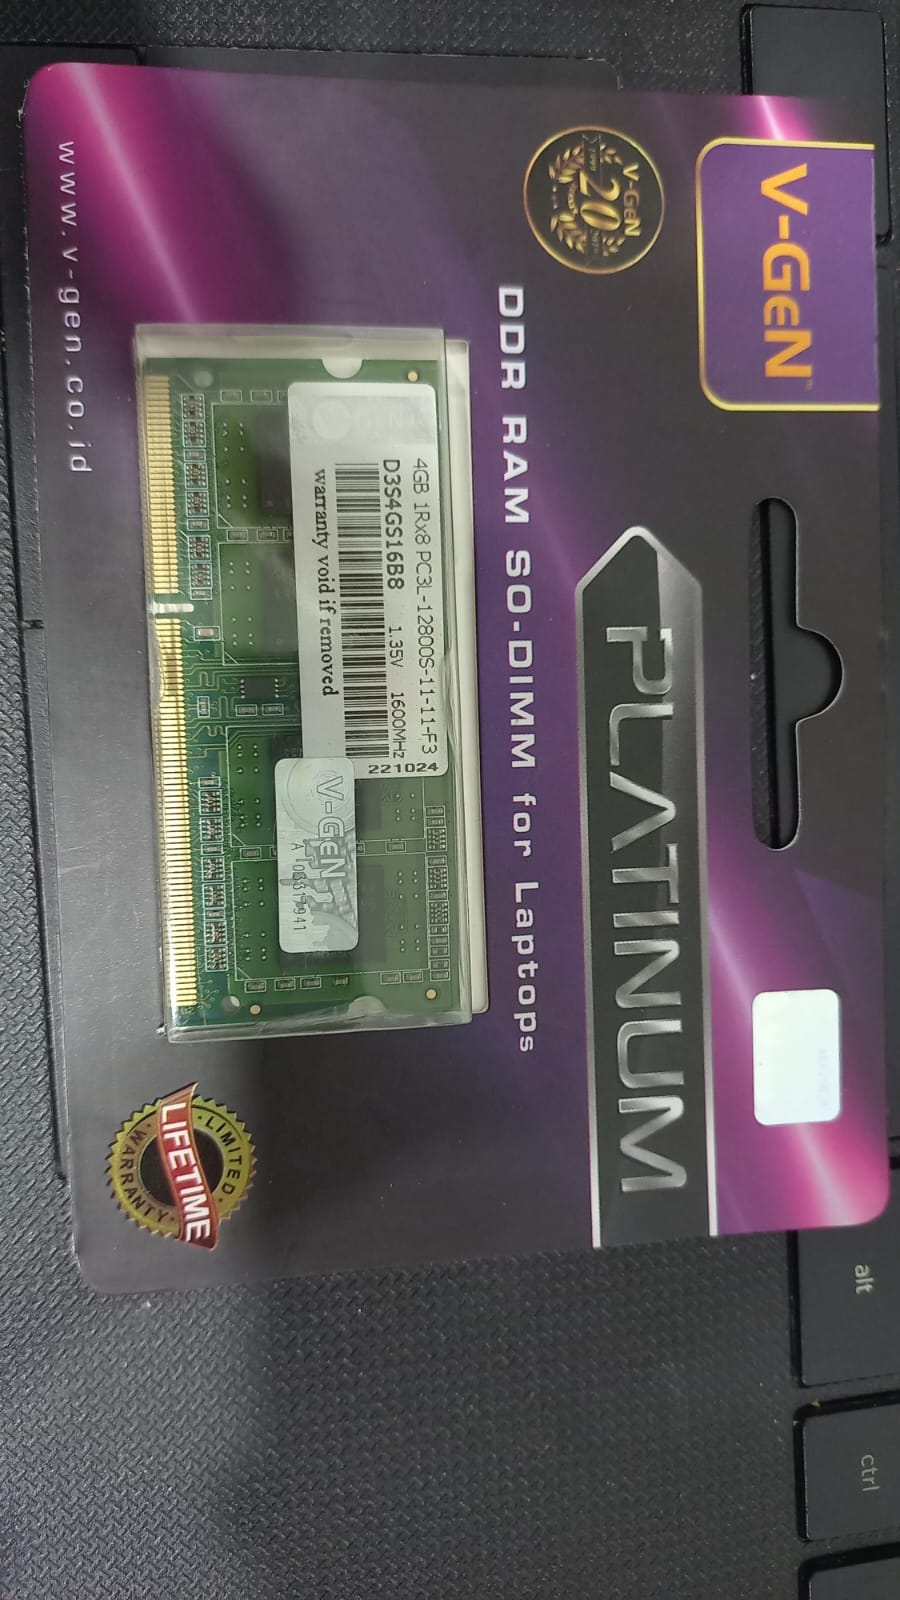 V-Gen Platinum Sodimm DDR3 4GB